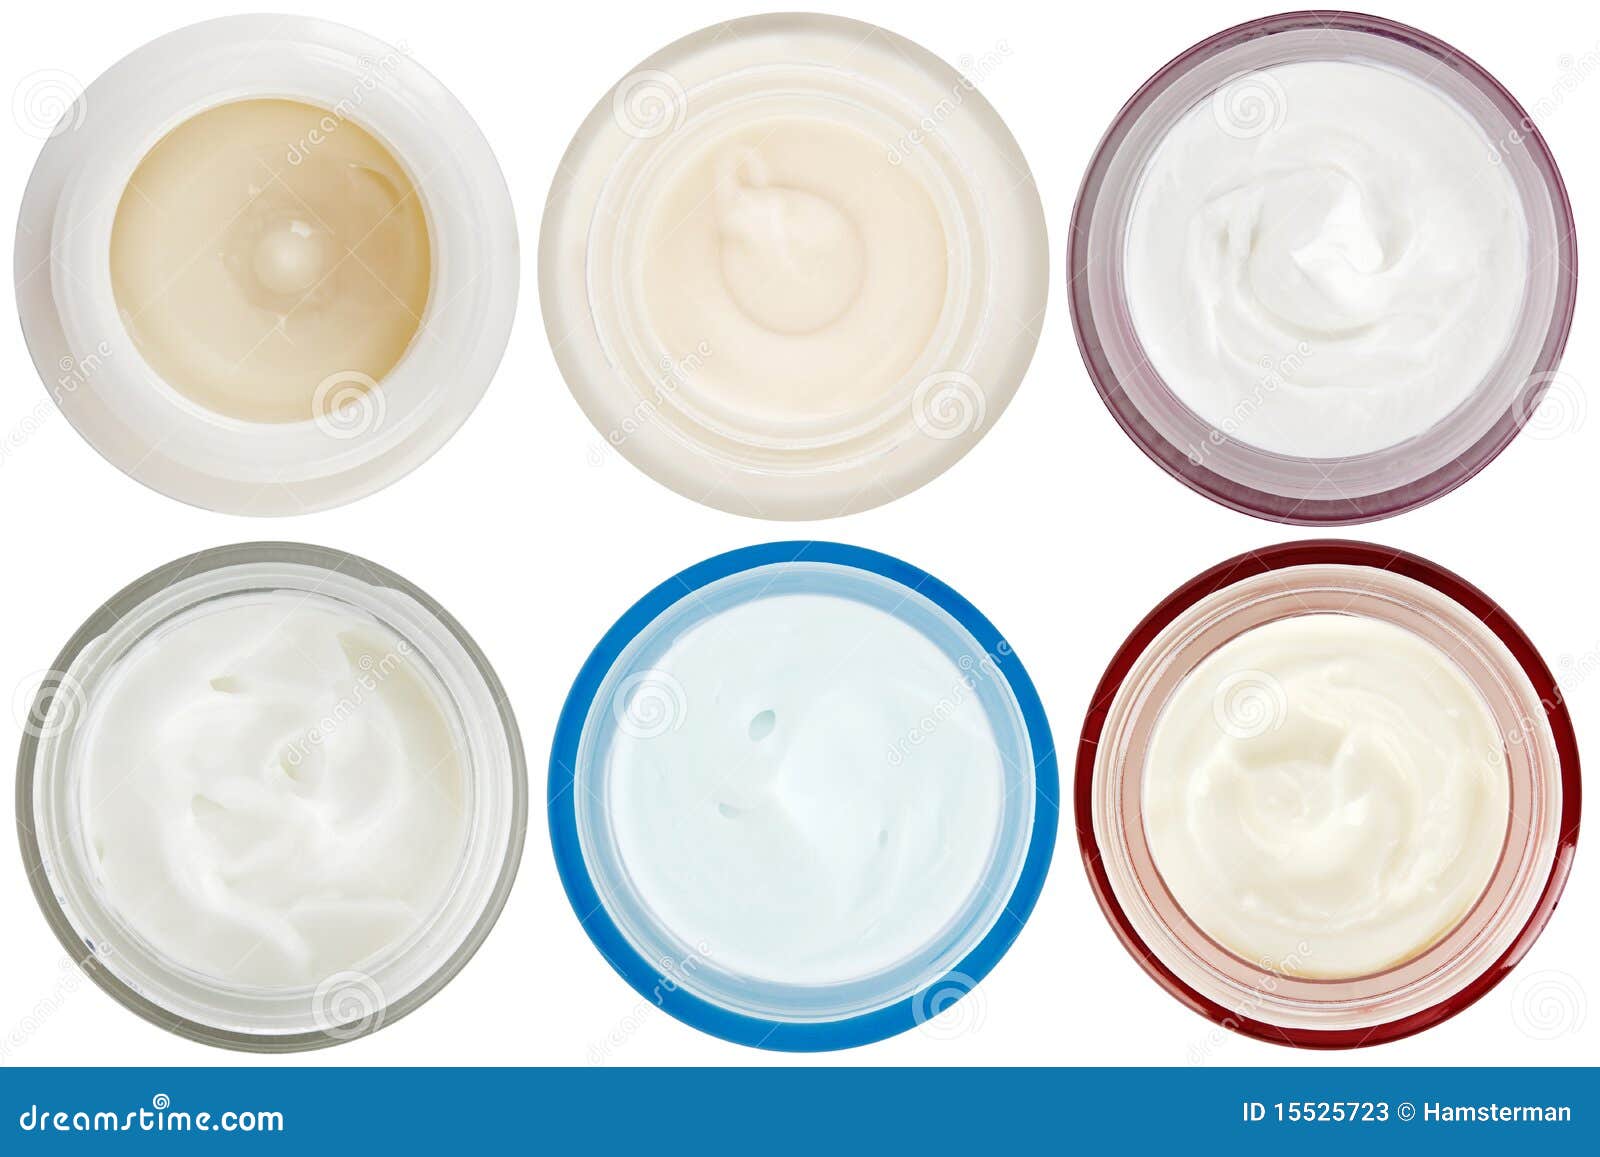 set of 6 different dermal creams and gels